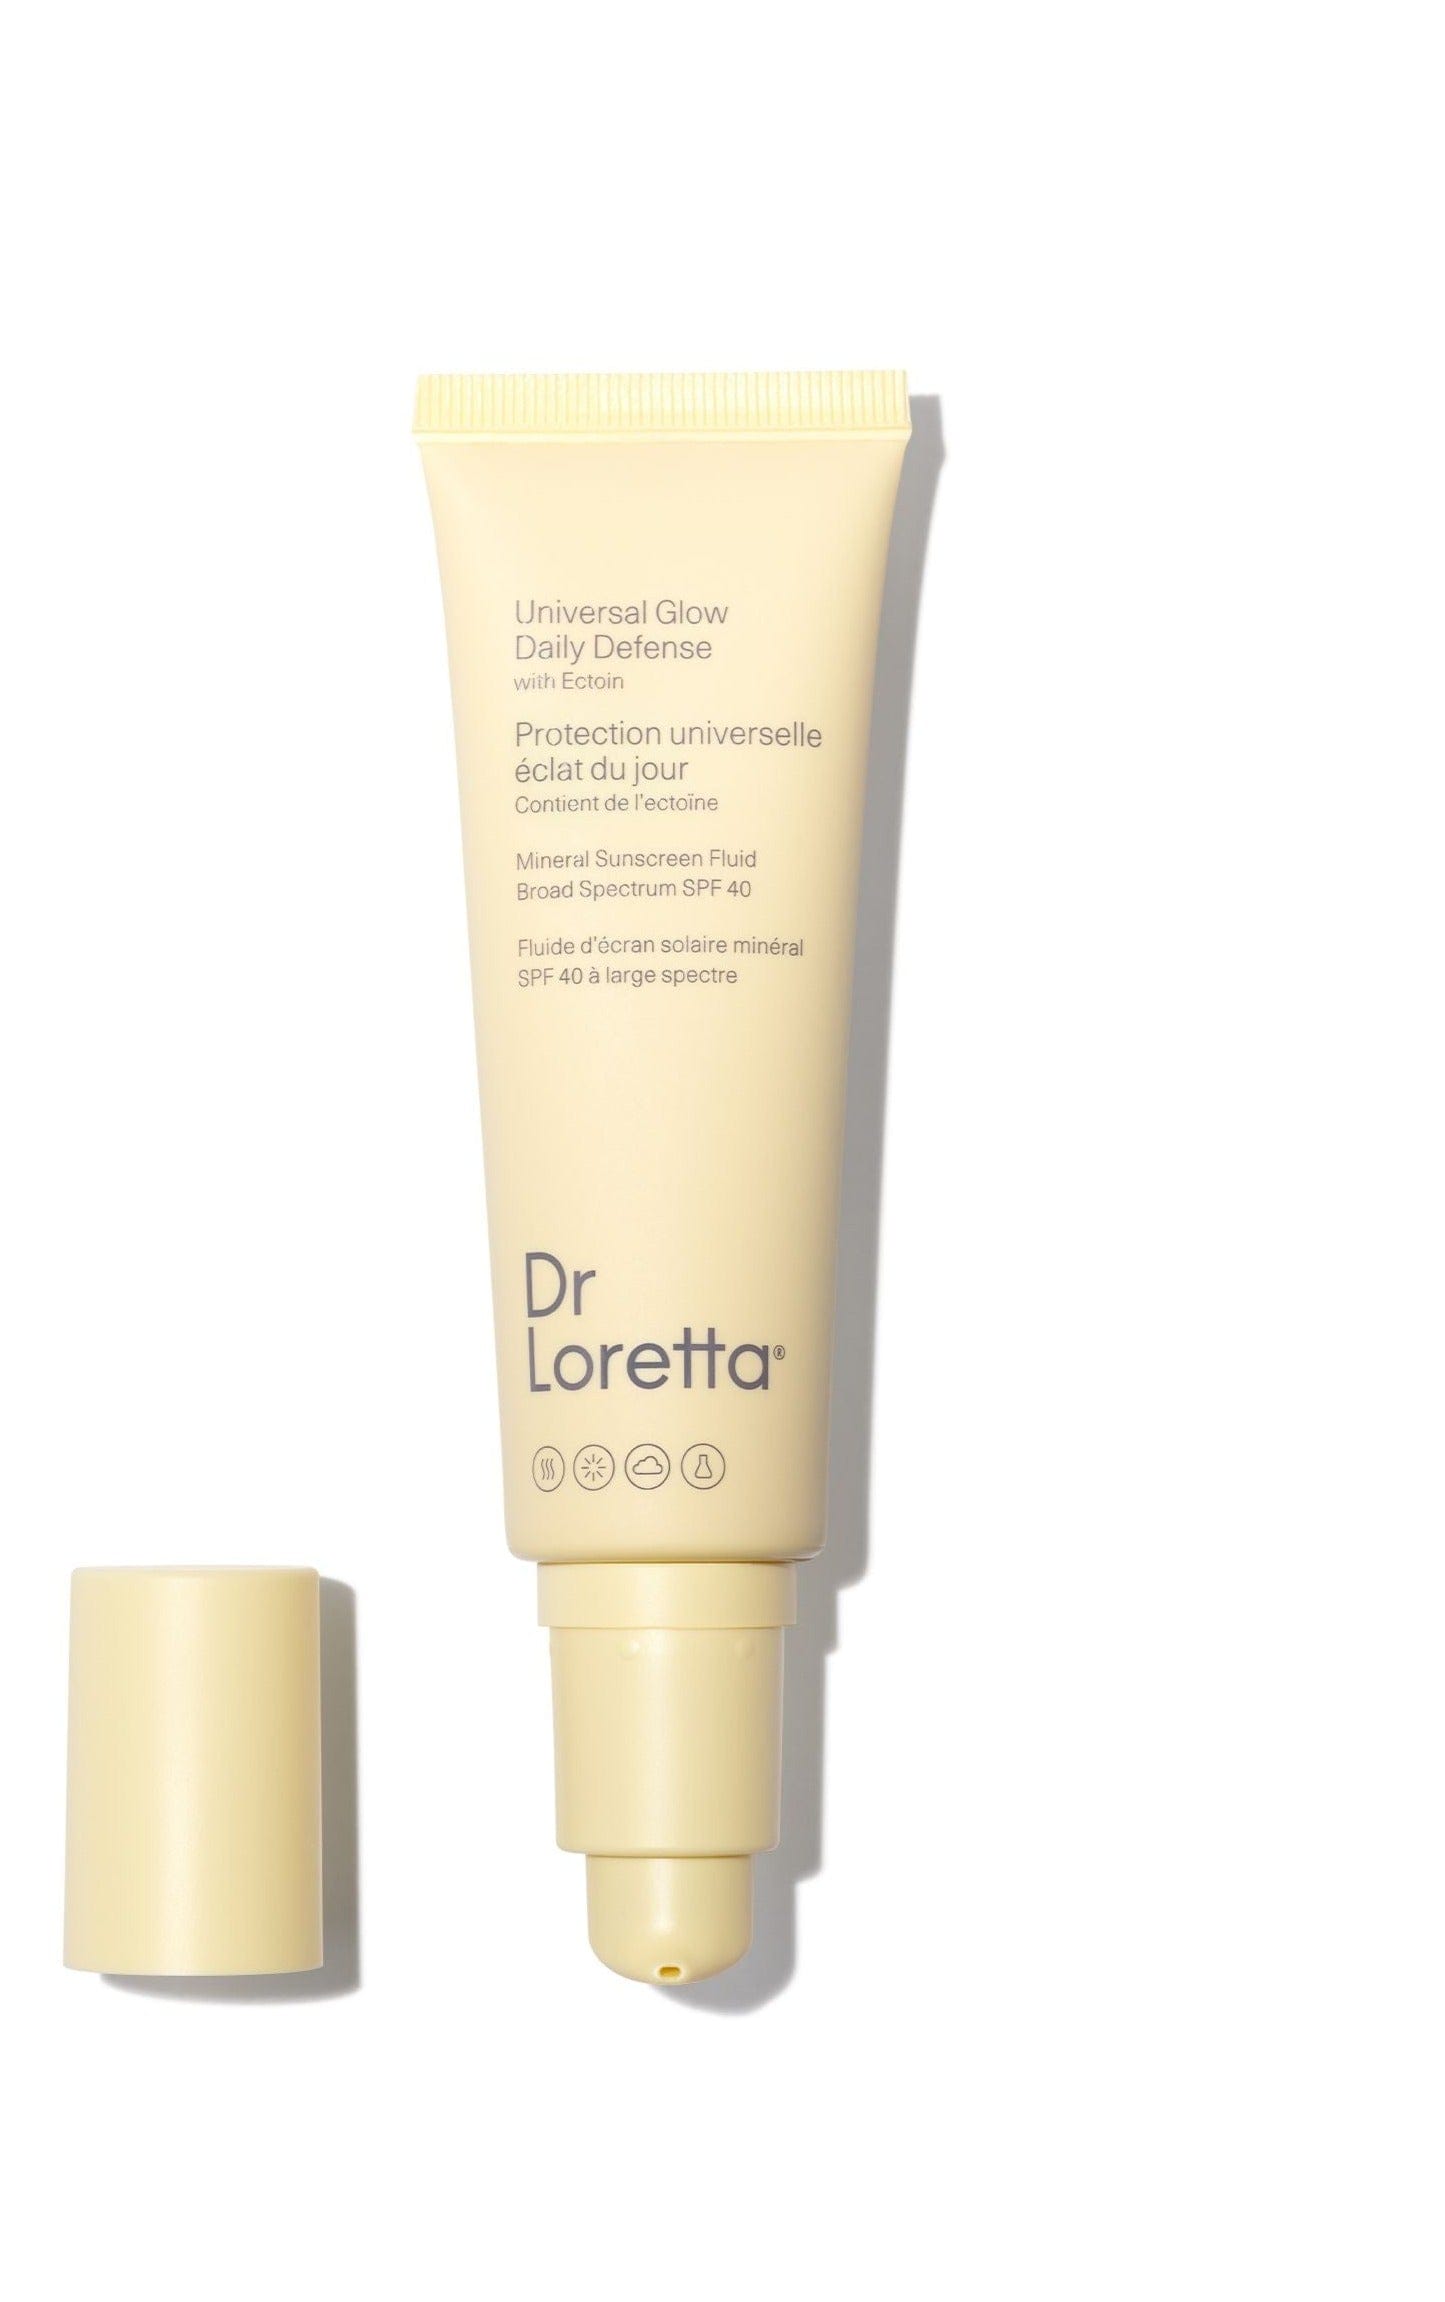 Dr Loretta sunscreen Universal Glow Daily Defense Mineral Sunscreen Fluid SPF 40 sunja link - canada